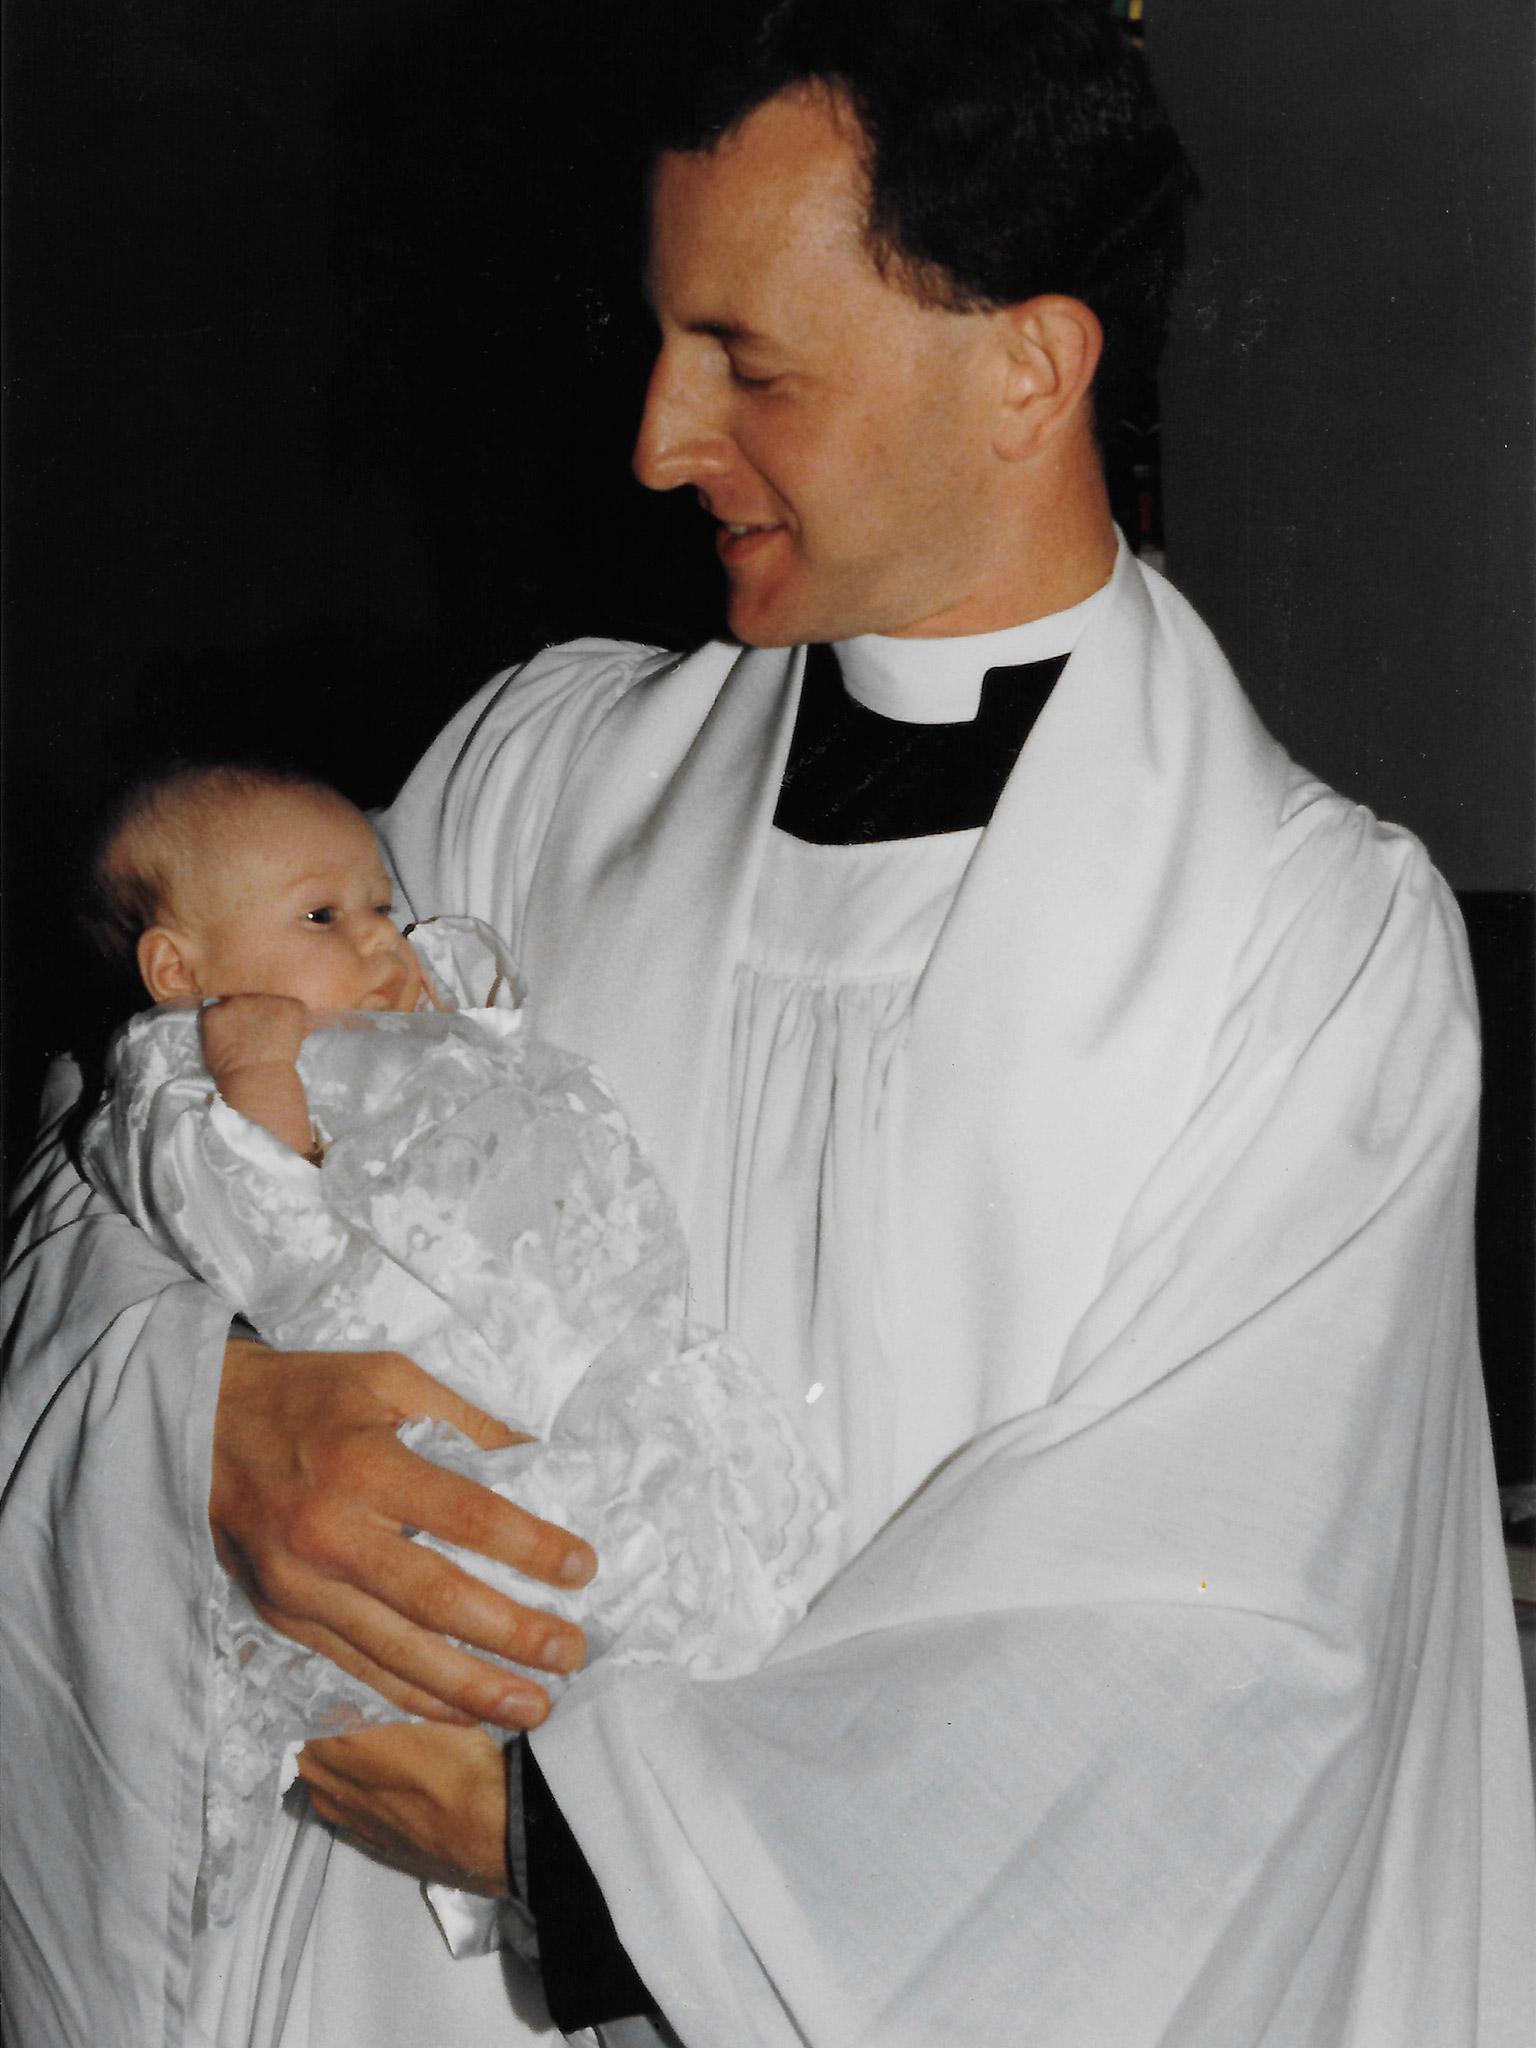 Simon baptising a baby at Dinnington church